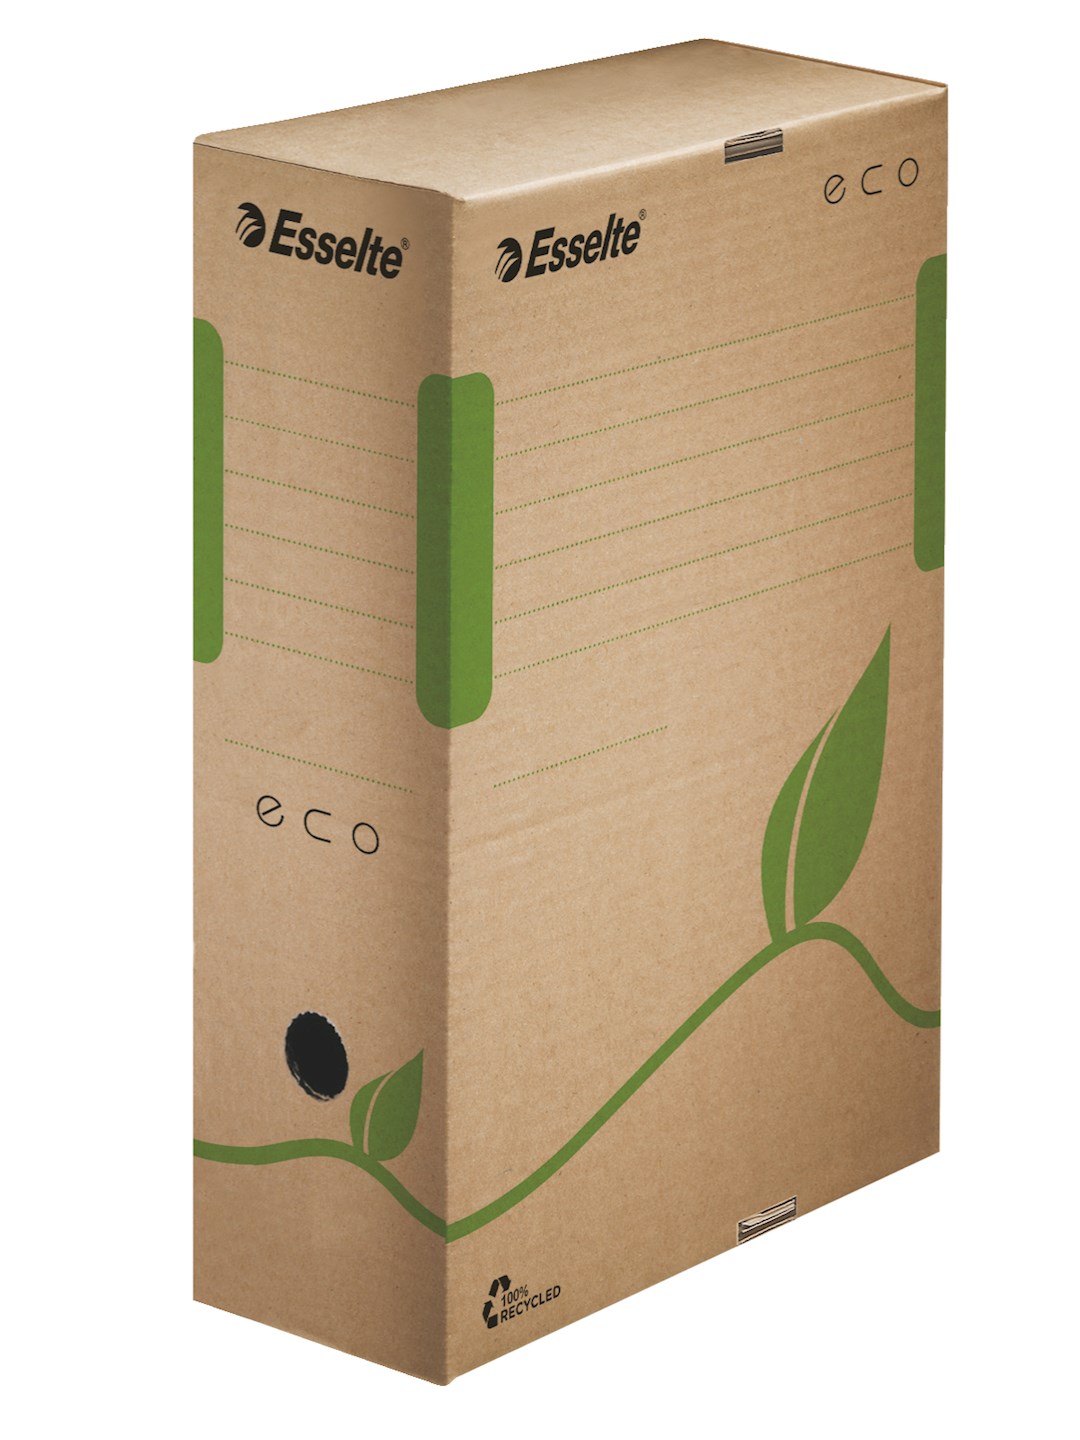 Pudło Esselte Eco, 100 mm